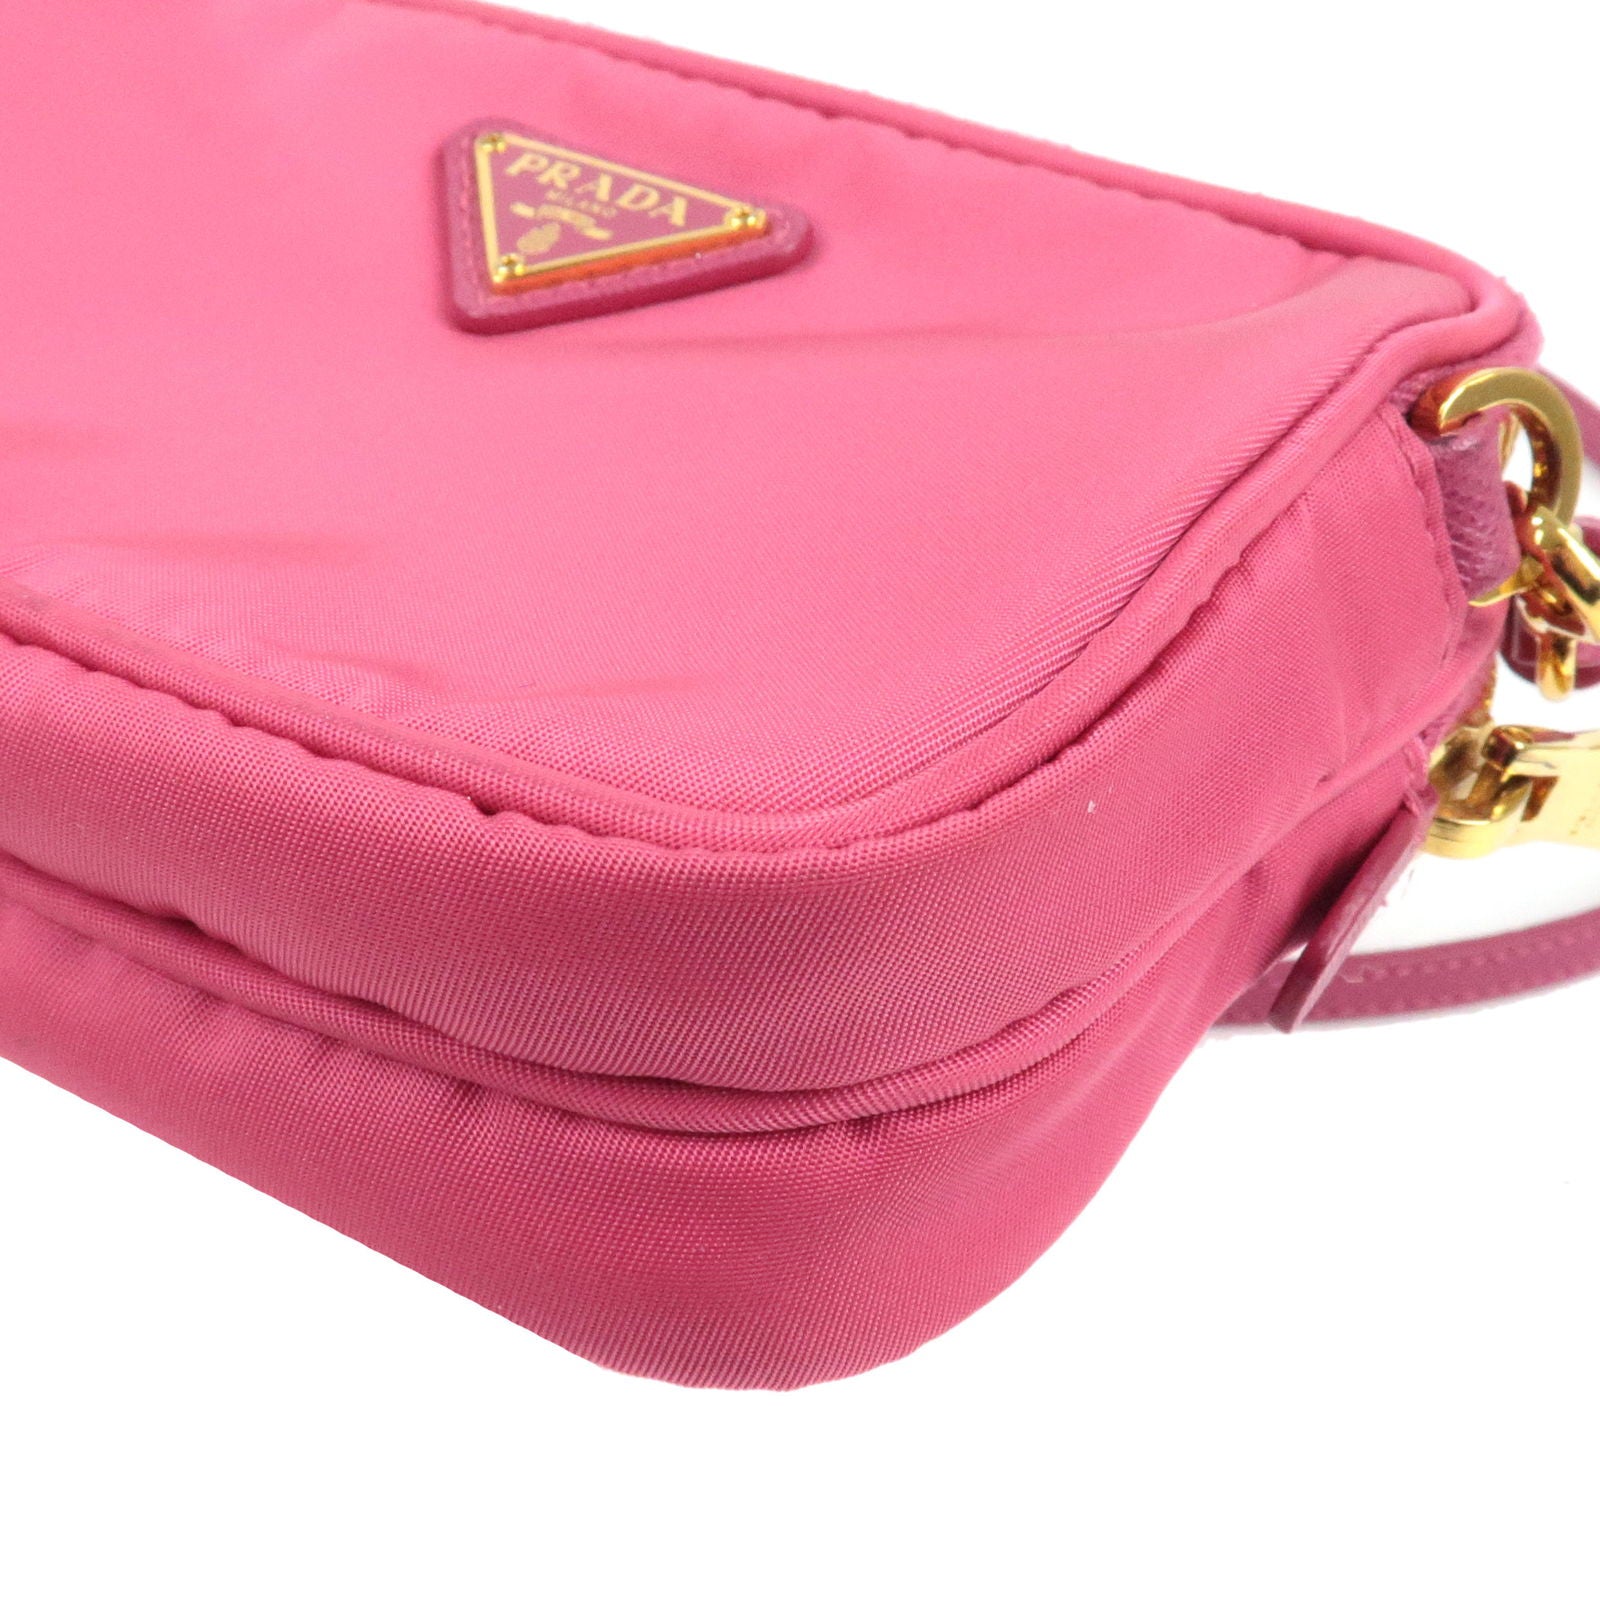 Prada pink Mini Leather Cross-Body Bag